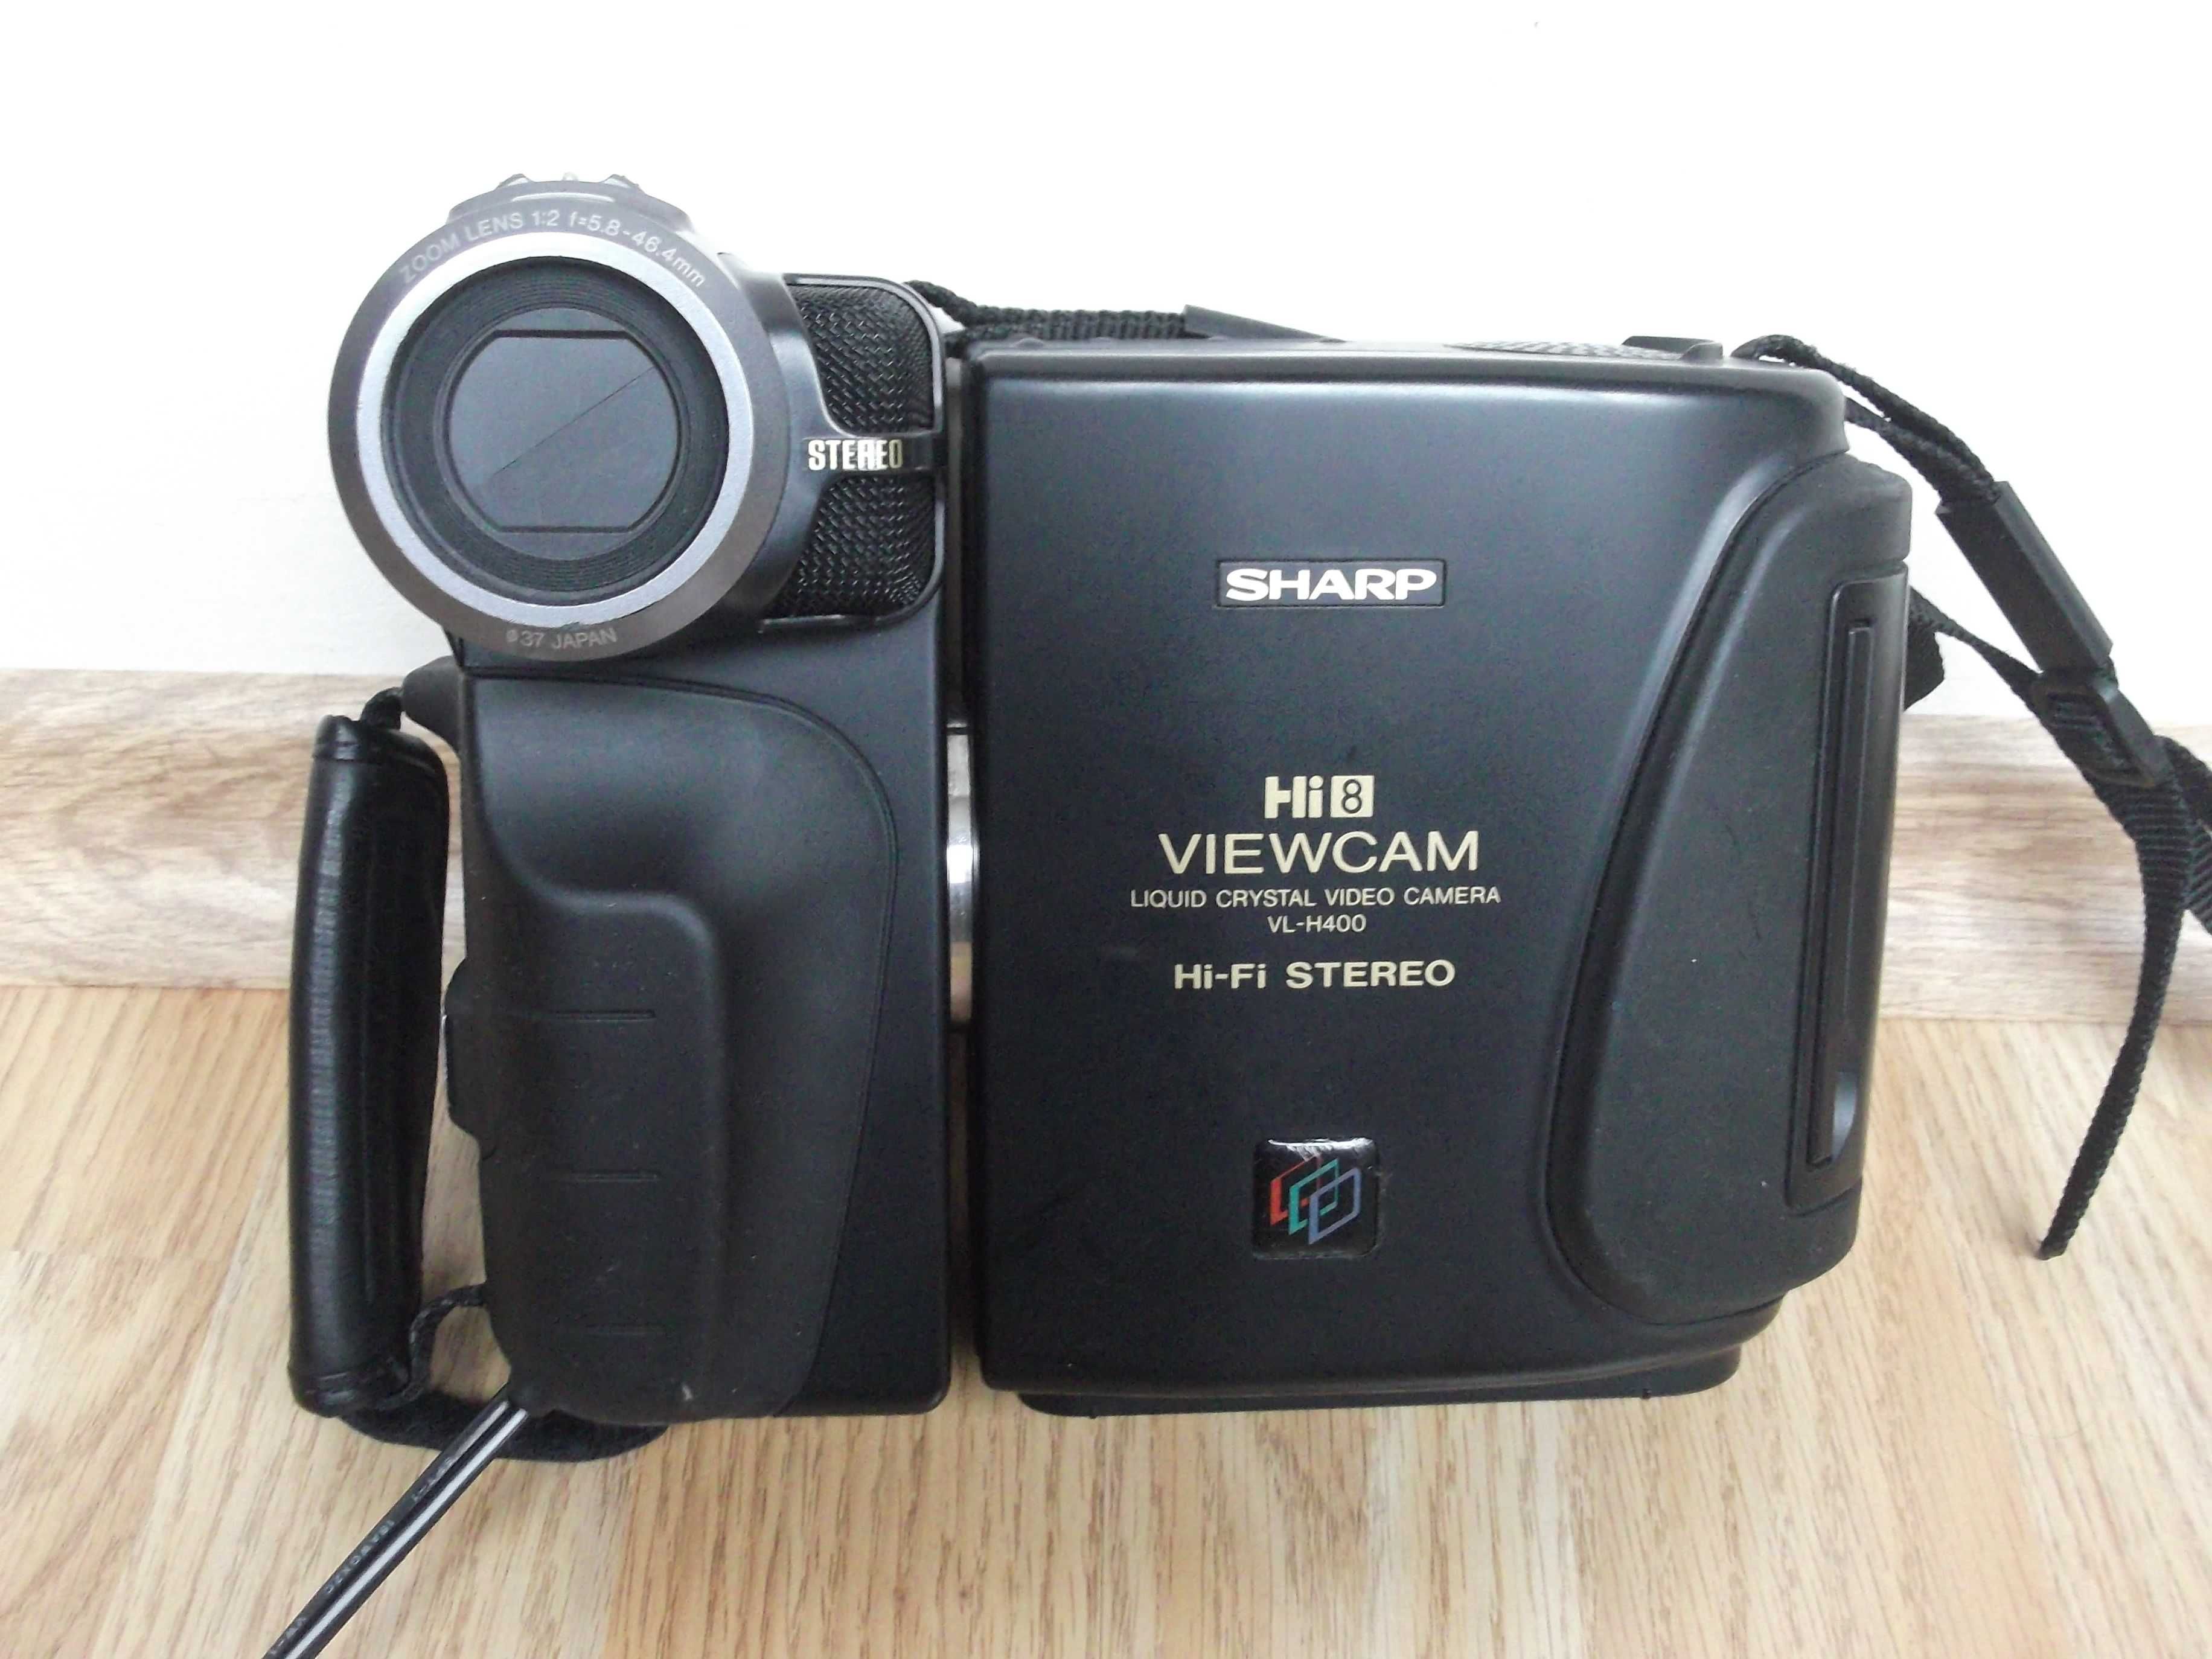 SHARP Hi8 ViewCam Liquid Crystal Video Camera VL-H400 Hi-Fi Stereo